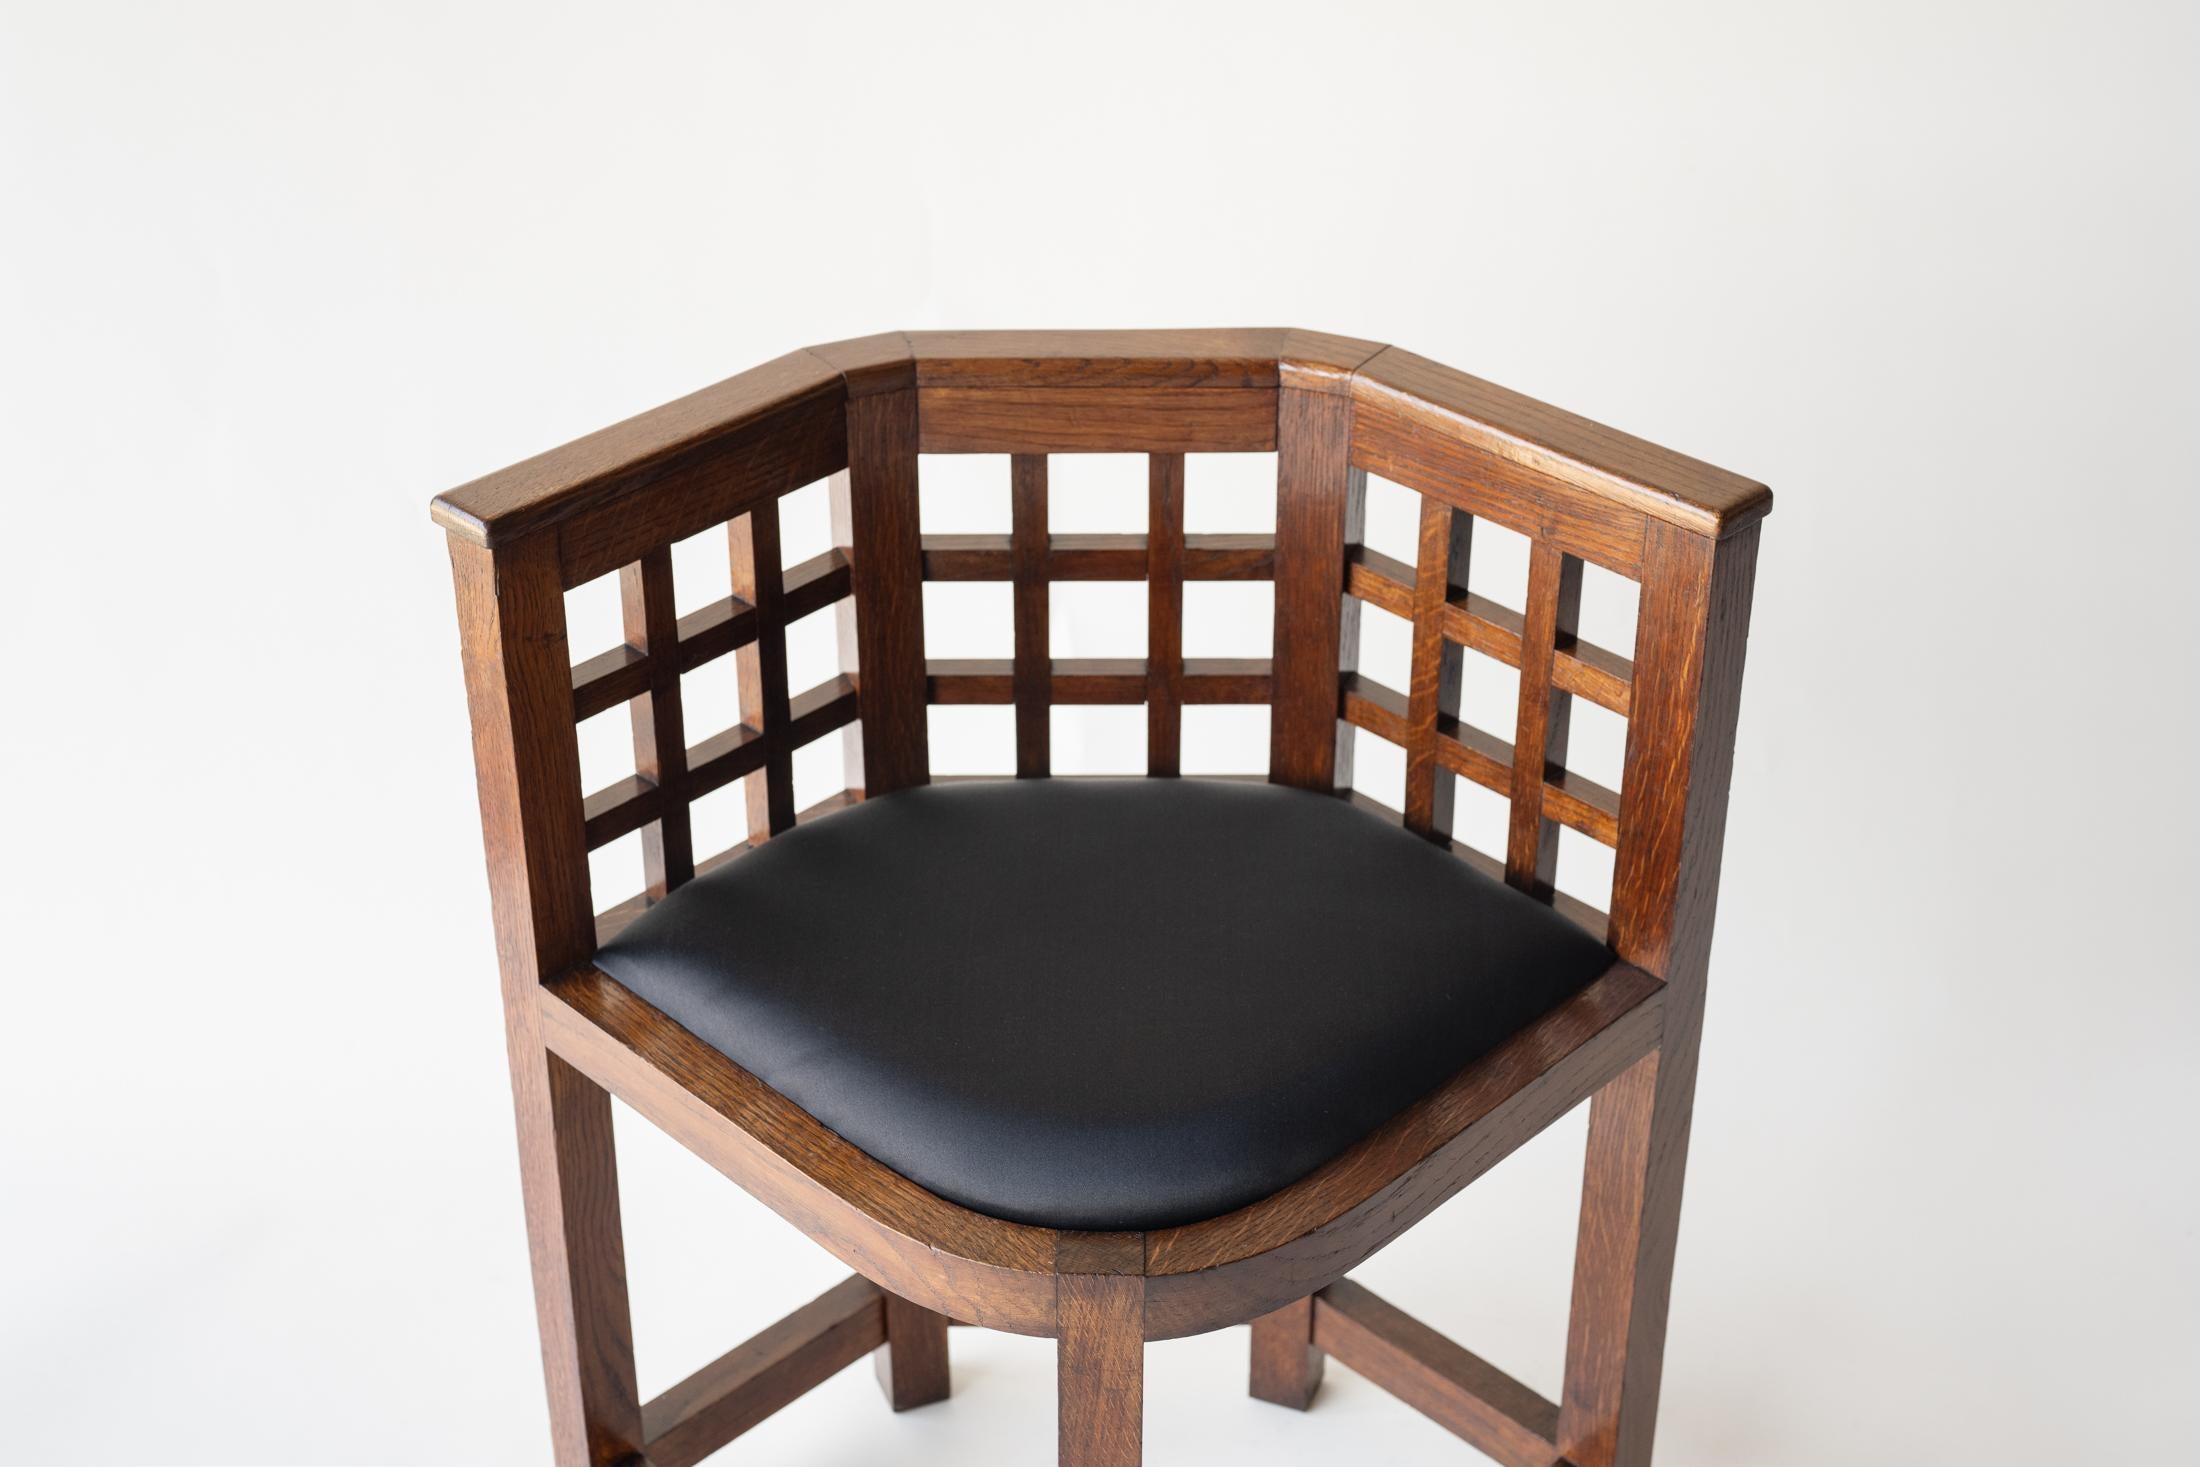 Oak Game Table Chair by Francis Jourdain, c. 1920